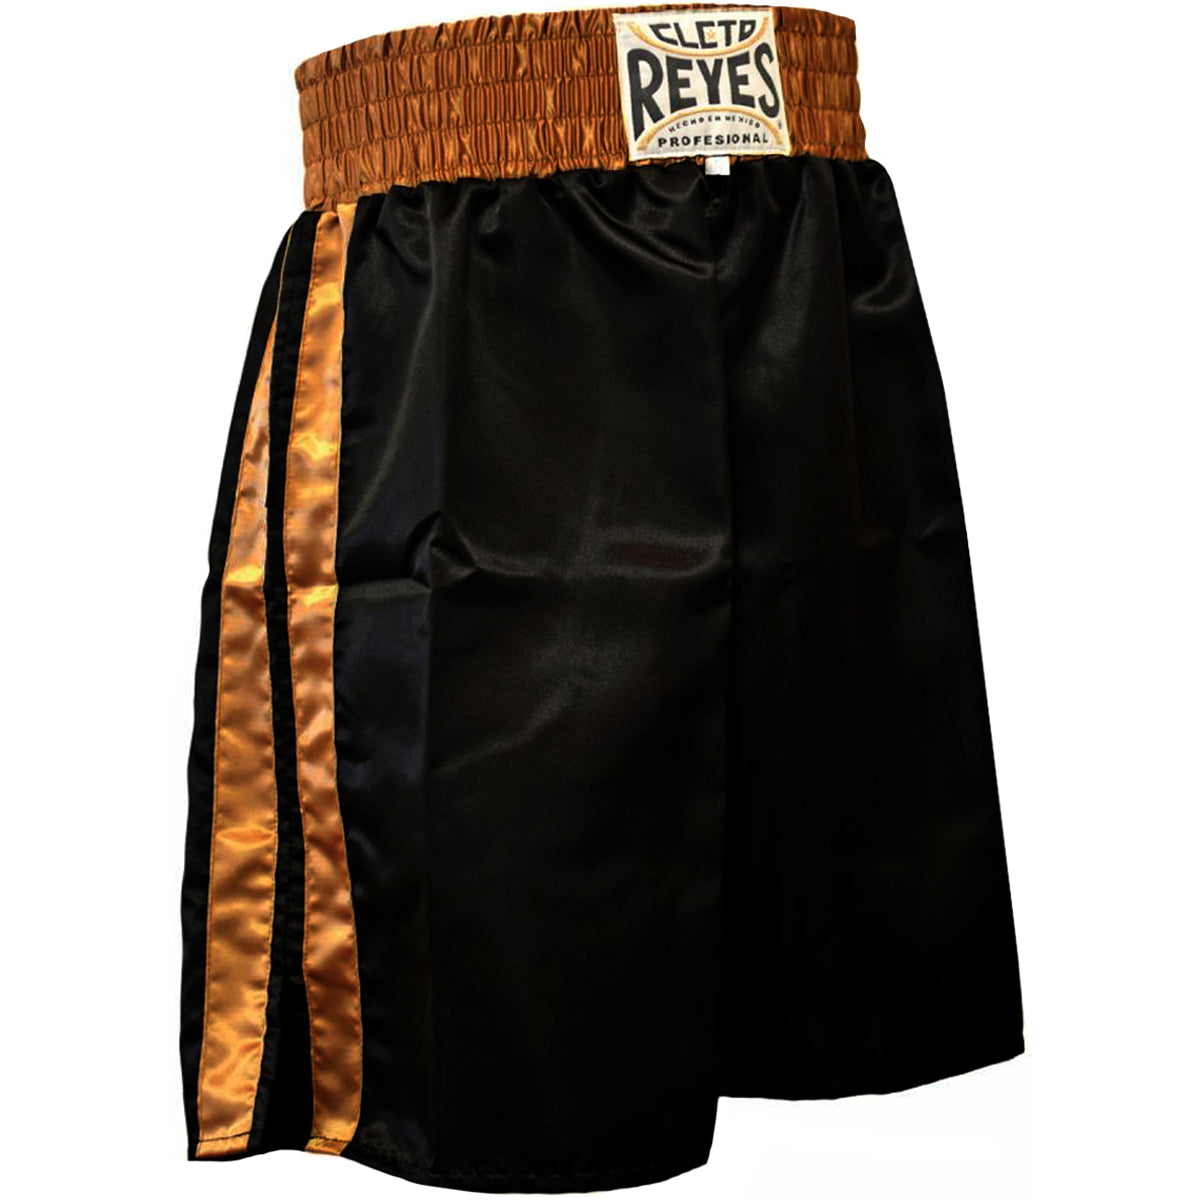 Cleto Reyes Satin Classic Boxing Trunks - Large (40") - Black/Gold Cleto Reyes